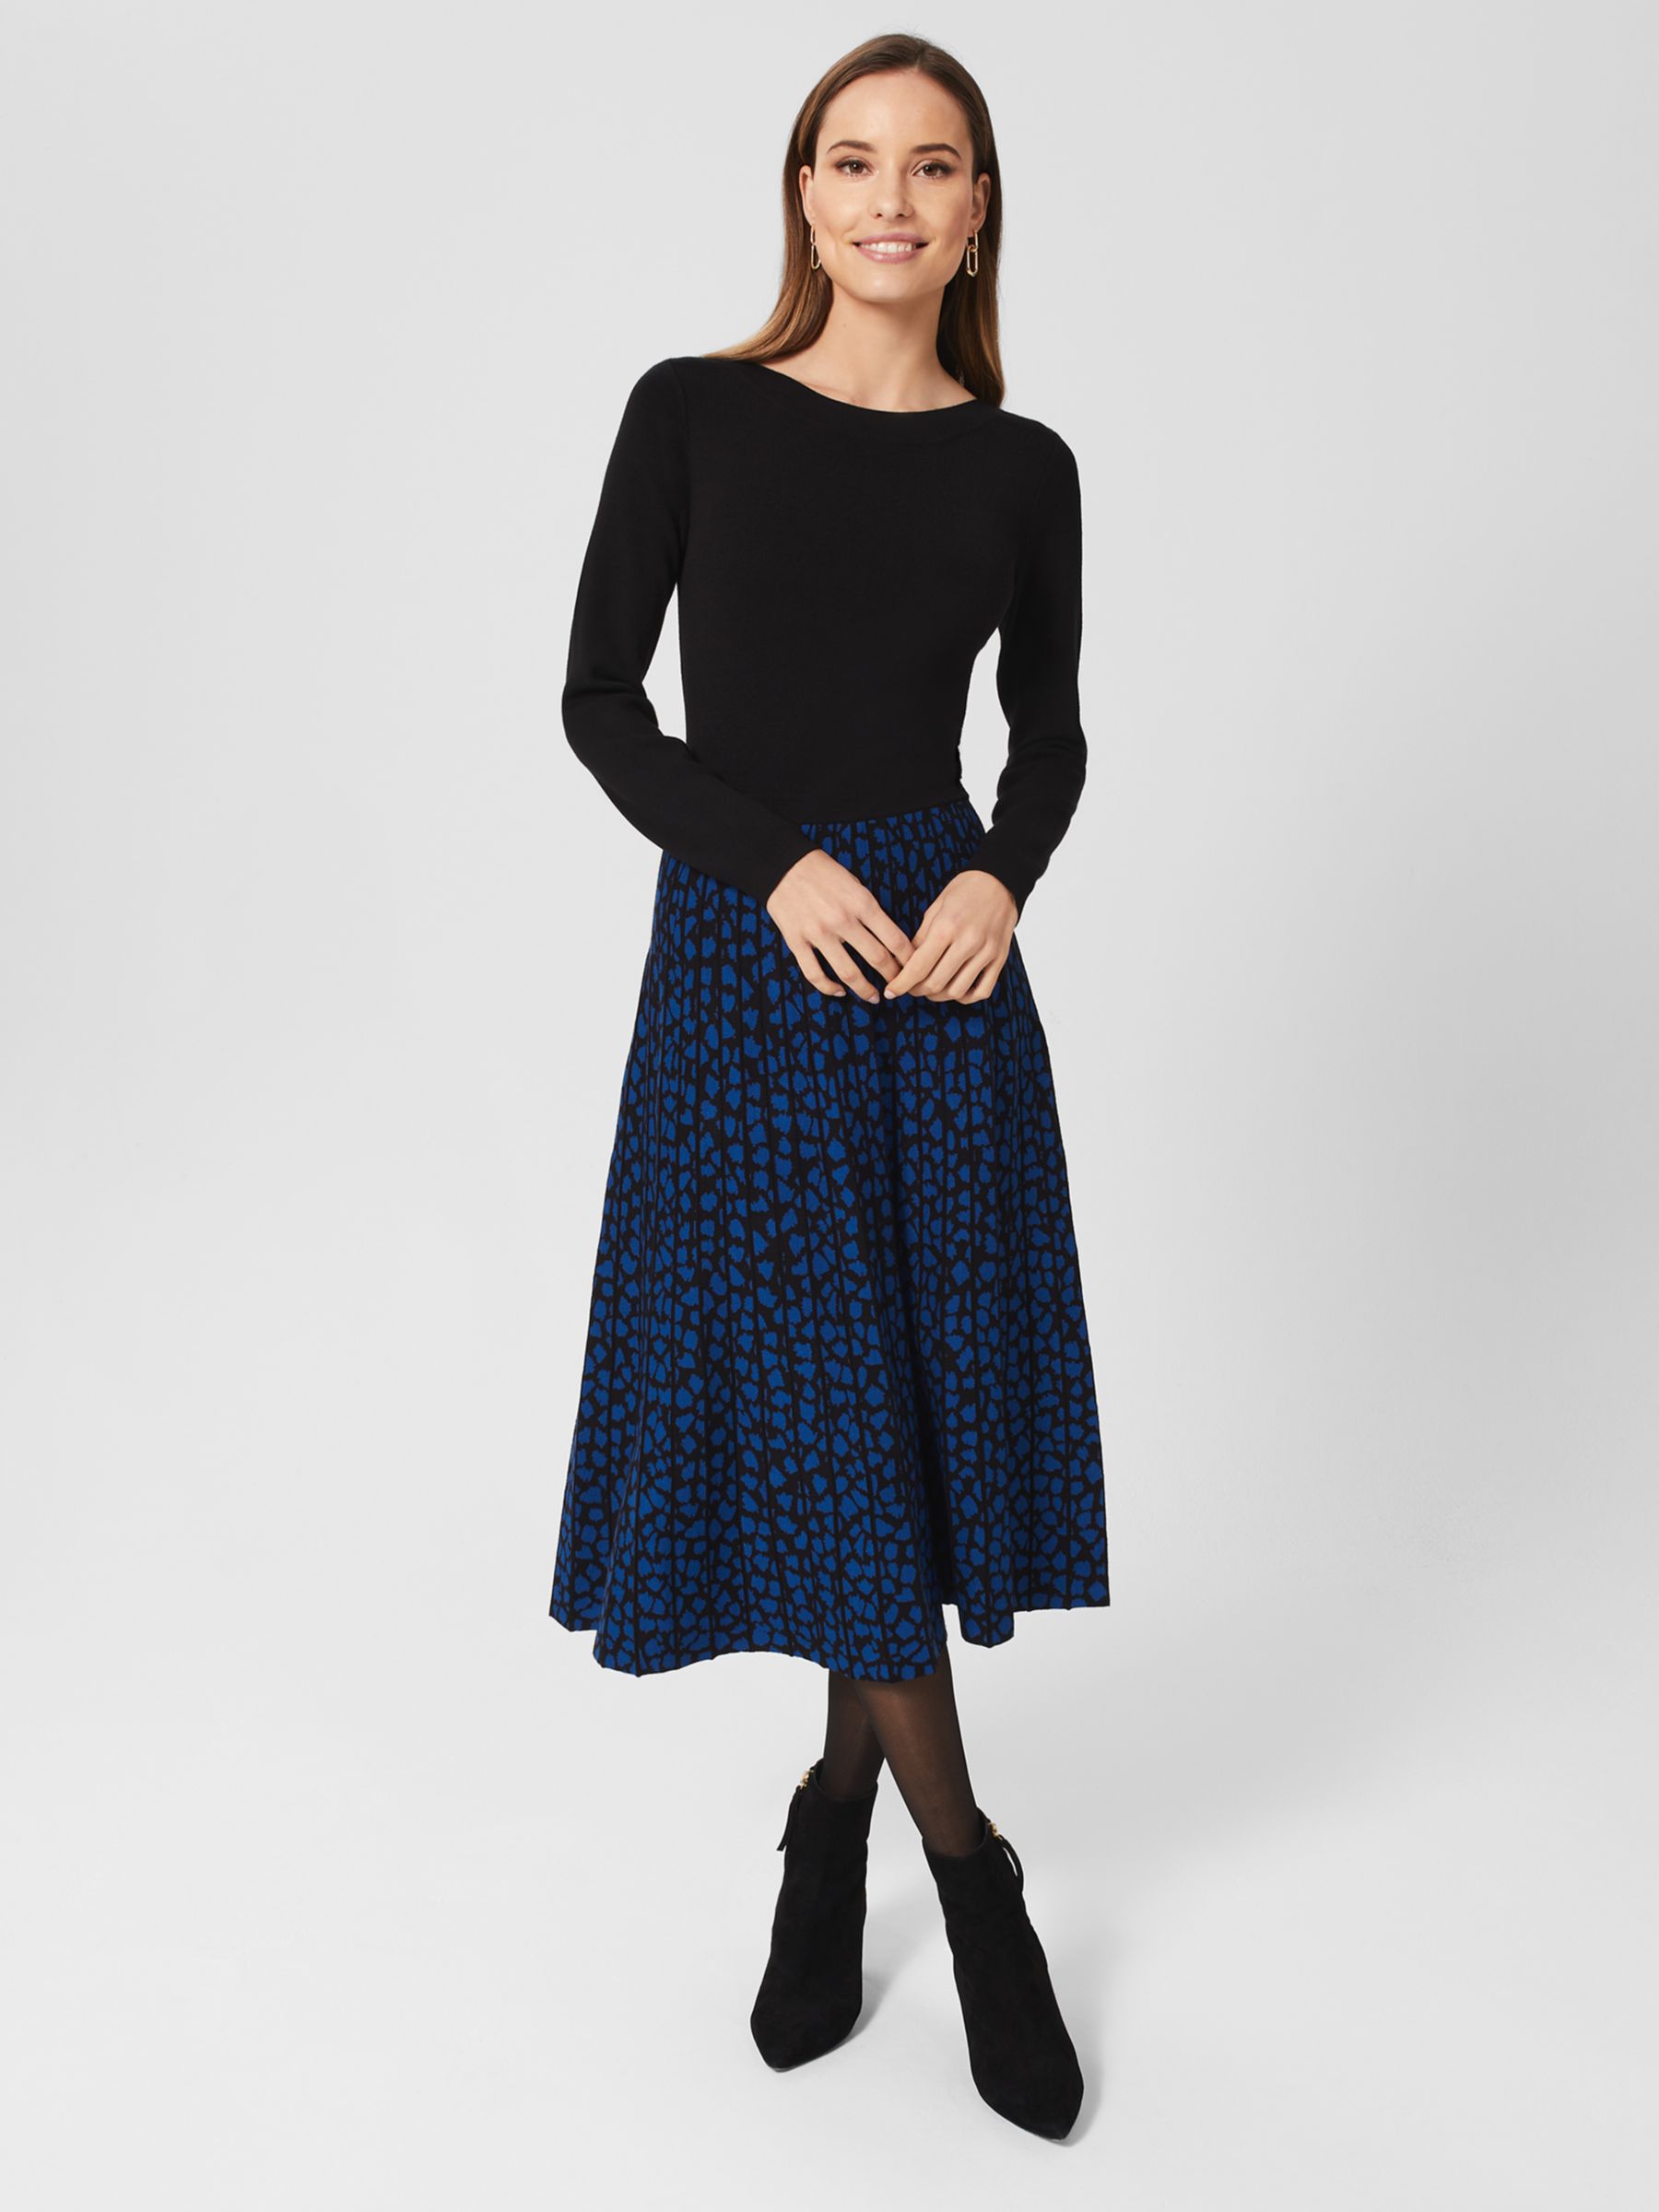 Hobbs Elena Abstract Midi Dress, Black/Blue, 6